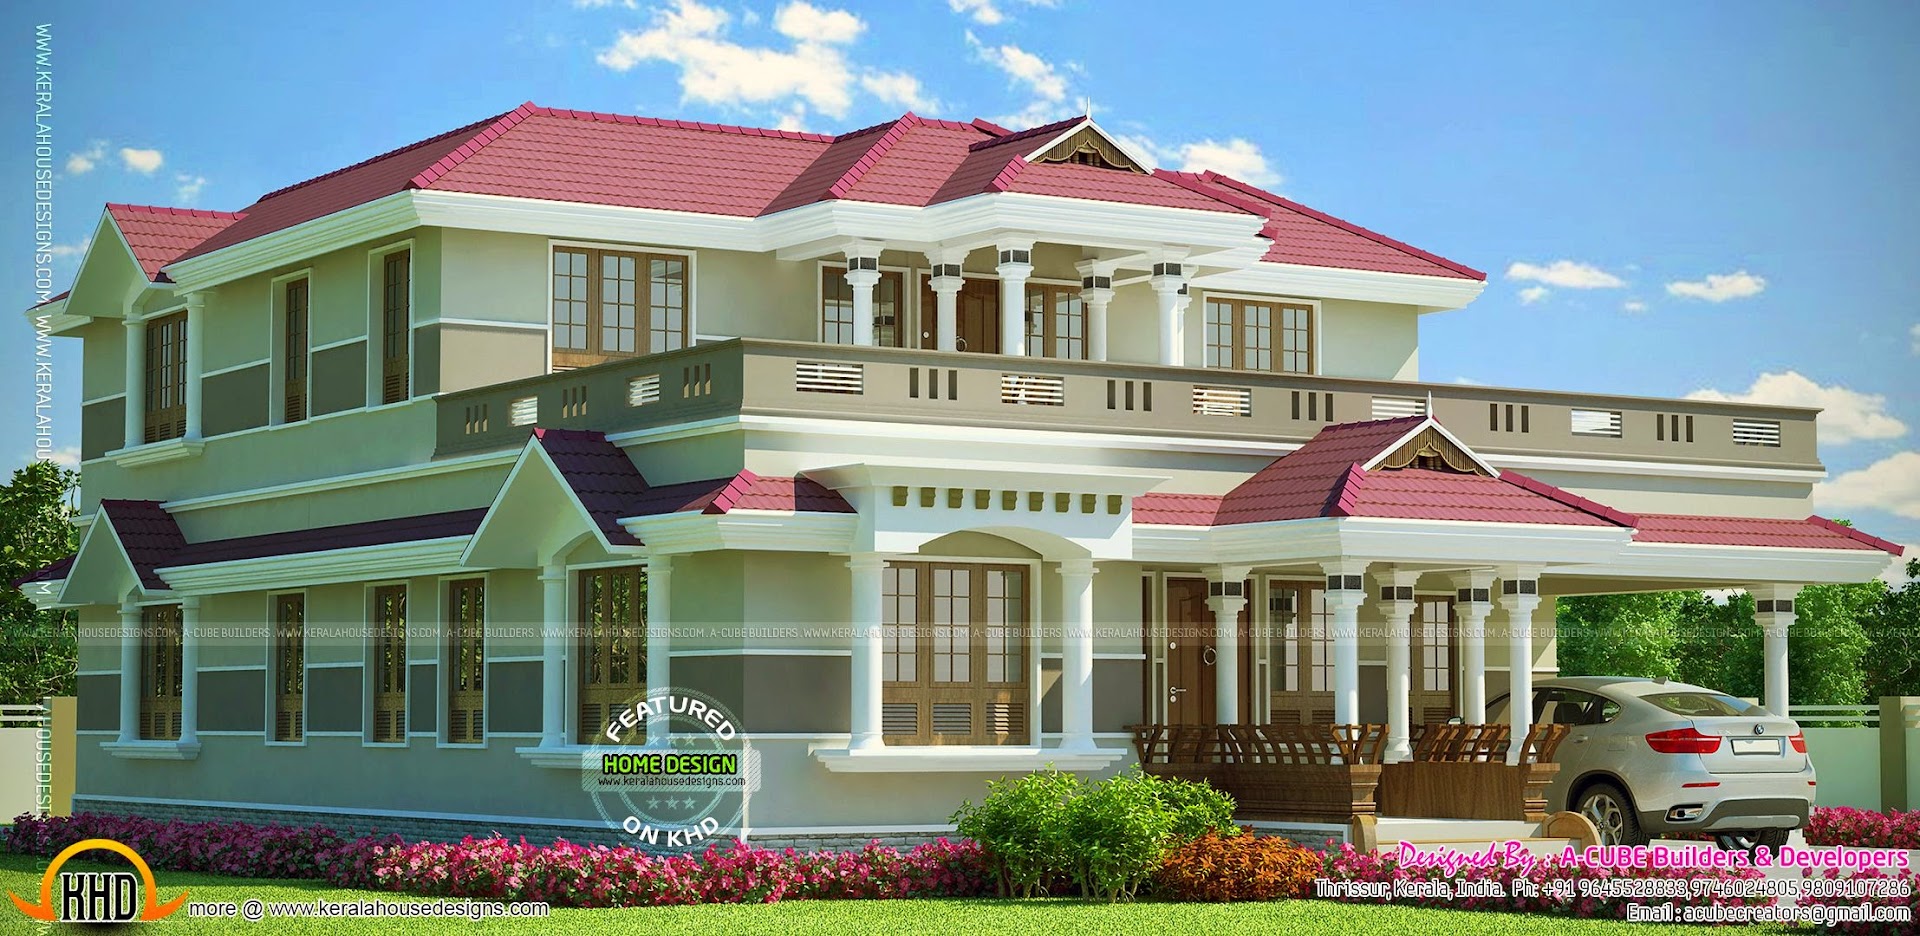 Grand Kerala  home  design  Kerala  home  design  and floor plans 